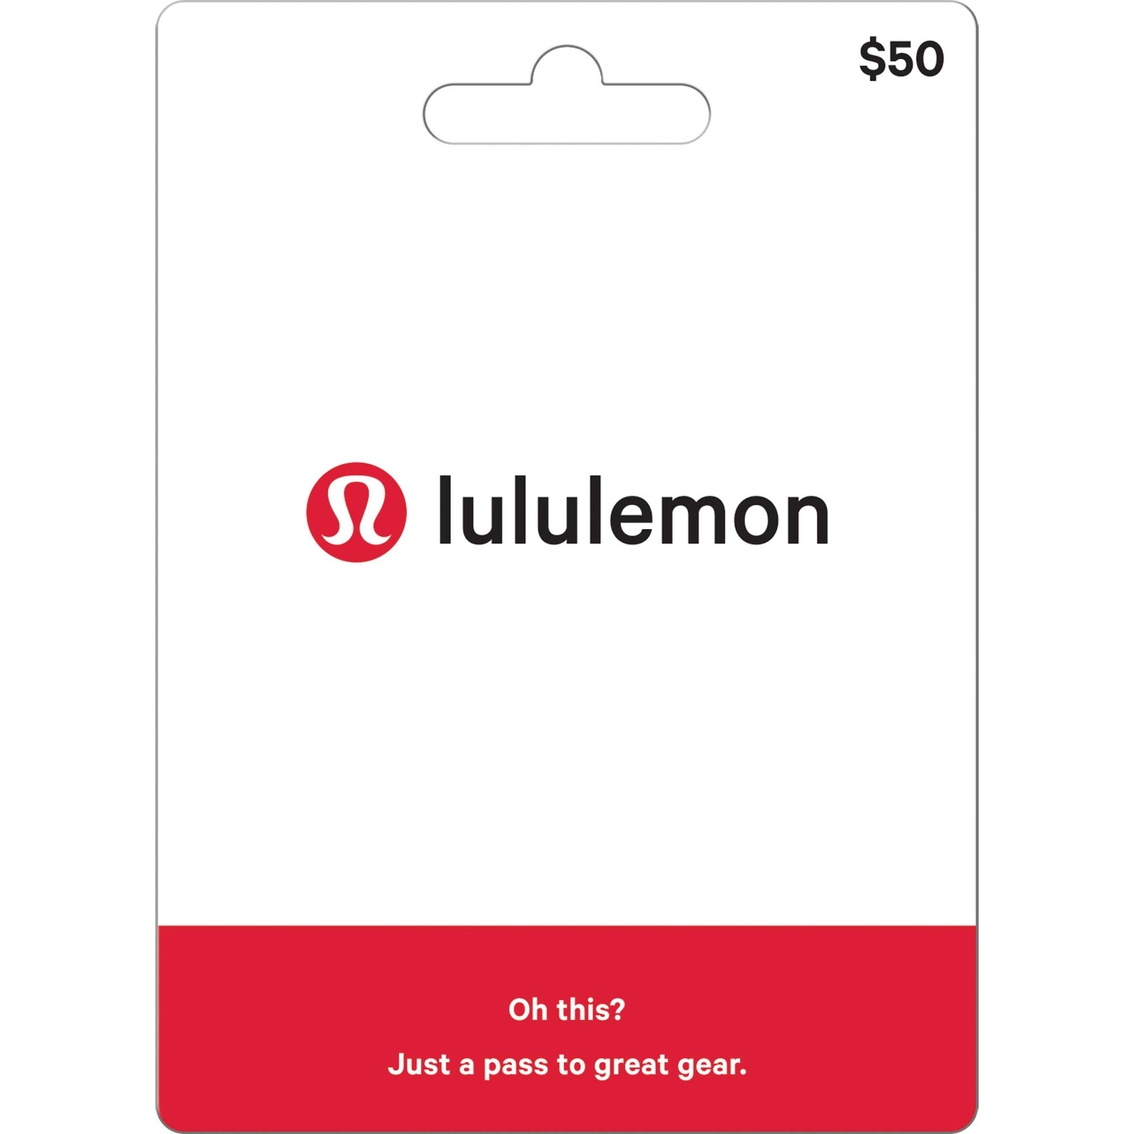 Lululemon Stores In Seattle Kraken